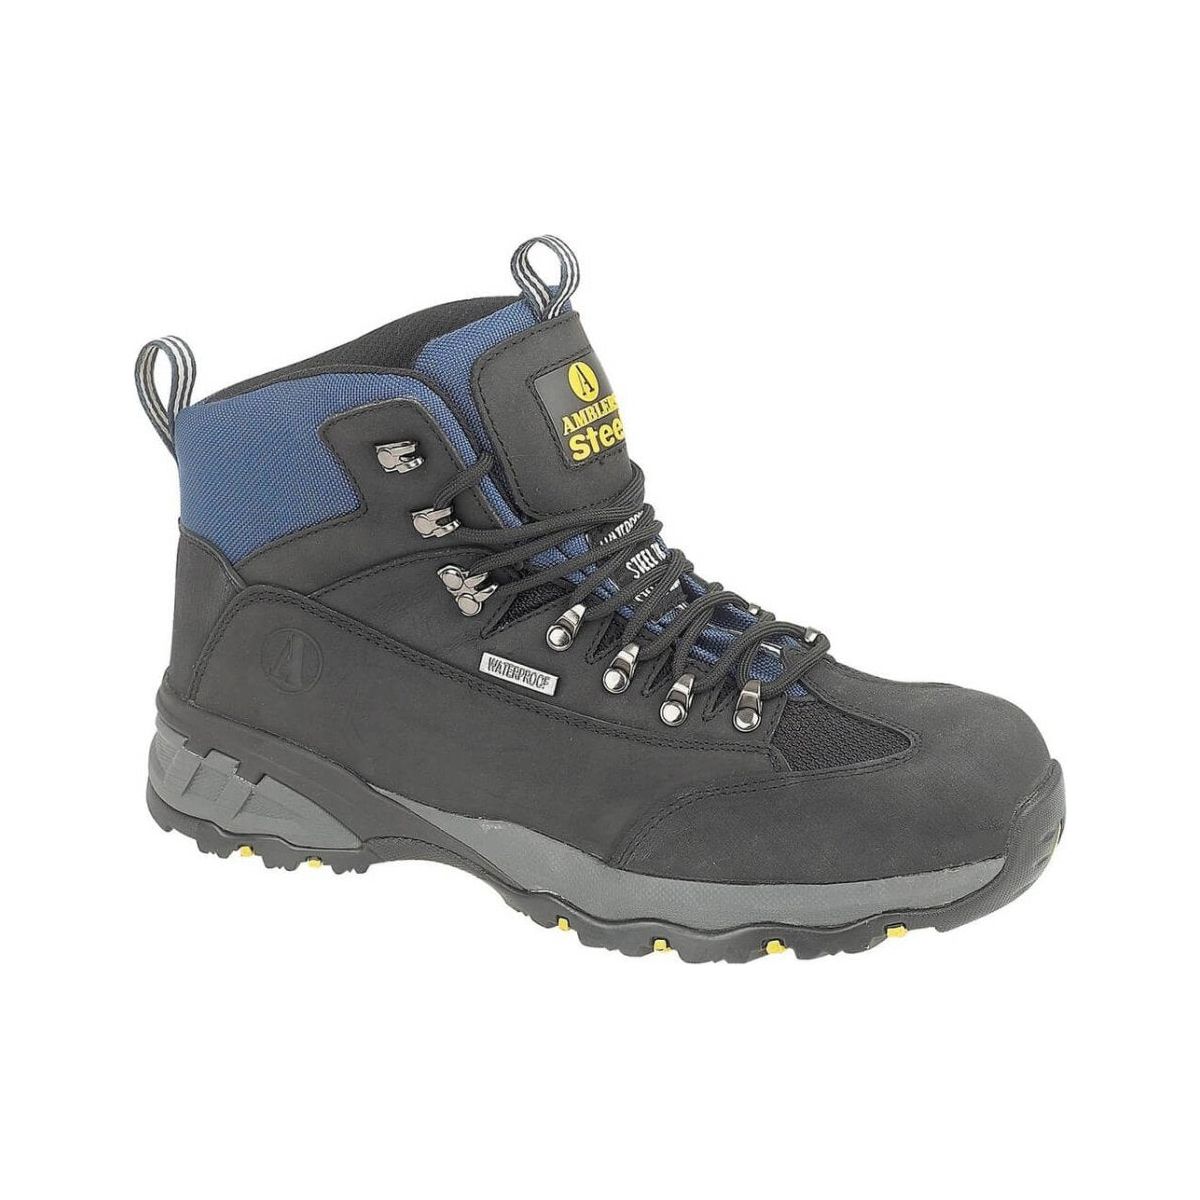 Amblers Fs161 Waterproof Safety Hiking Boots Mens - workweargurus.com